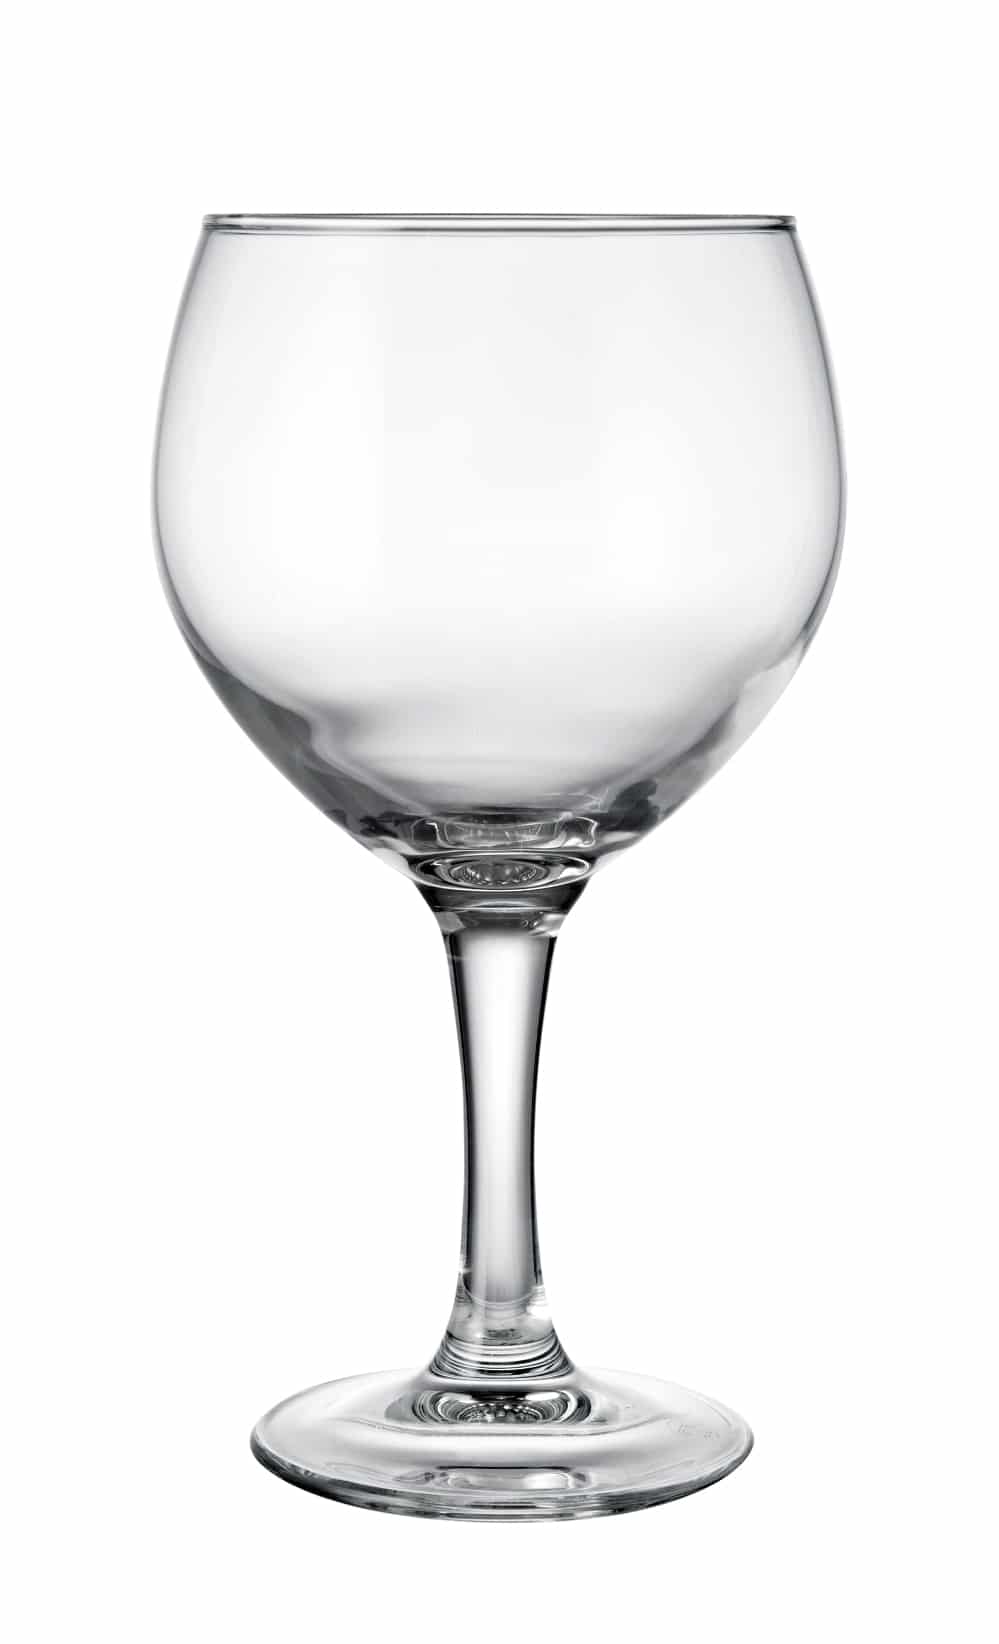 HAVANA ΠΟΤΗΡΙ Cocktail Glass 62CL ΓΥΑΛΙΝΟ HOSTELVIA VICRILA SPAIN ®